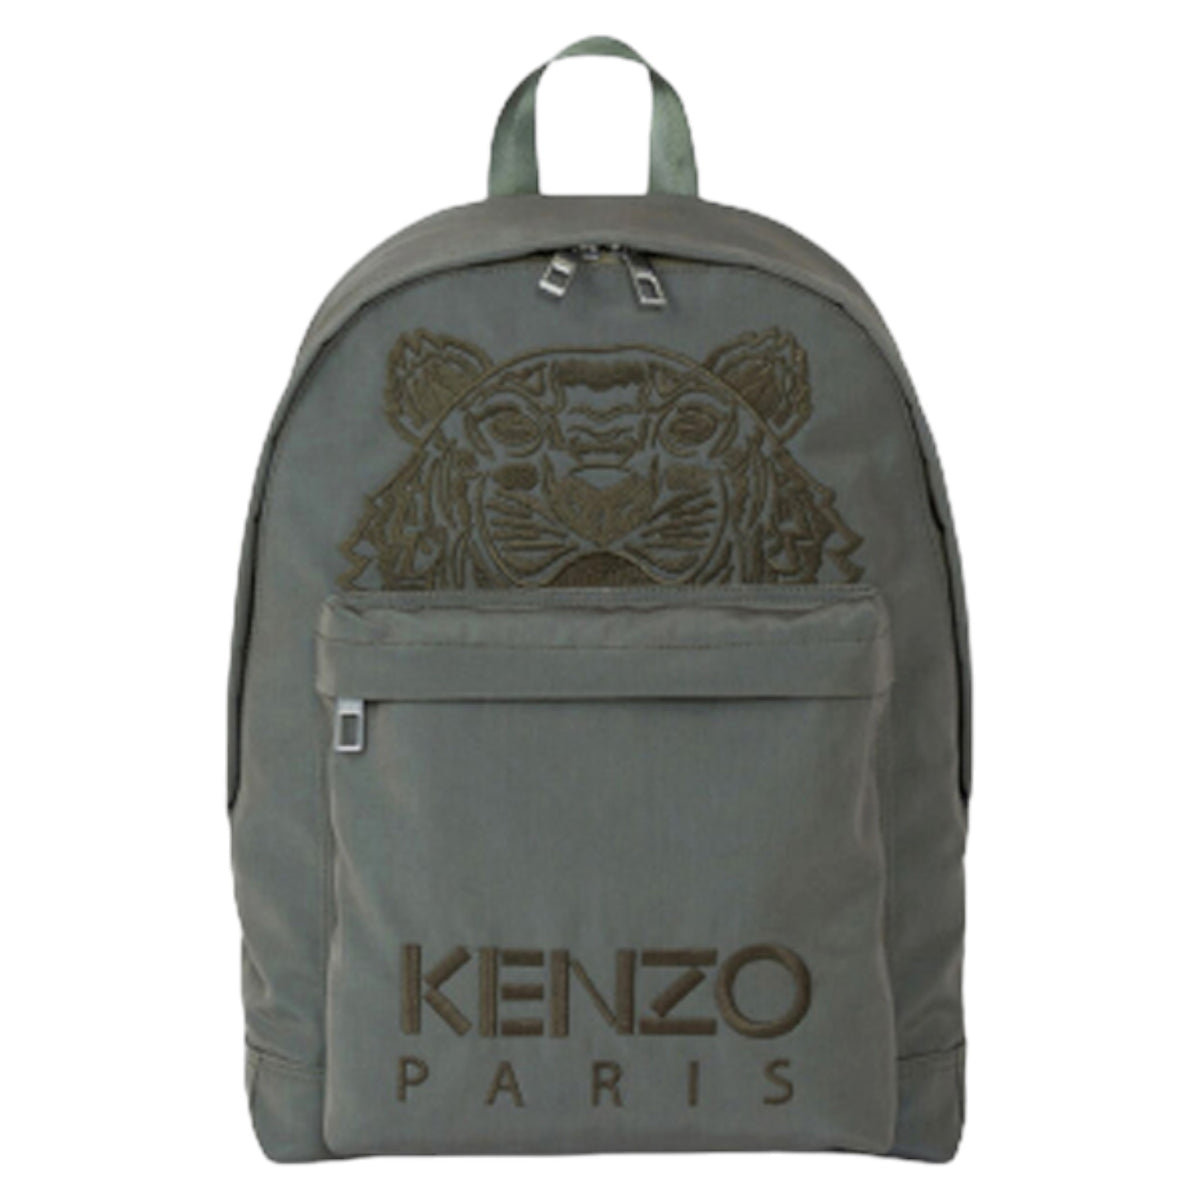 Kenzo Canvas Kampus Tiger Backpack